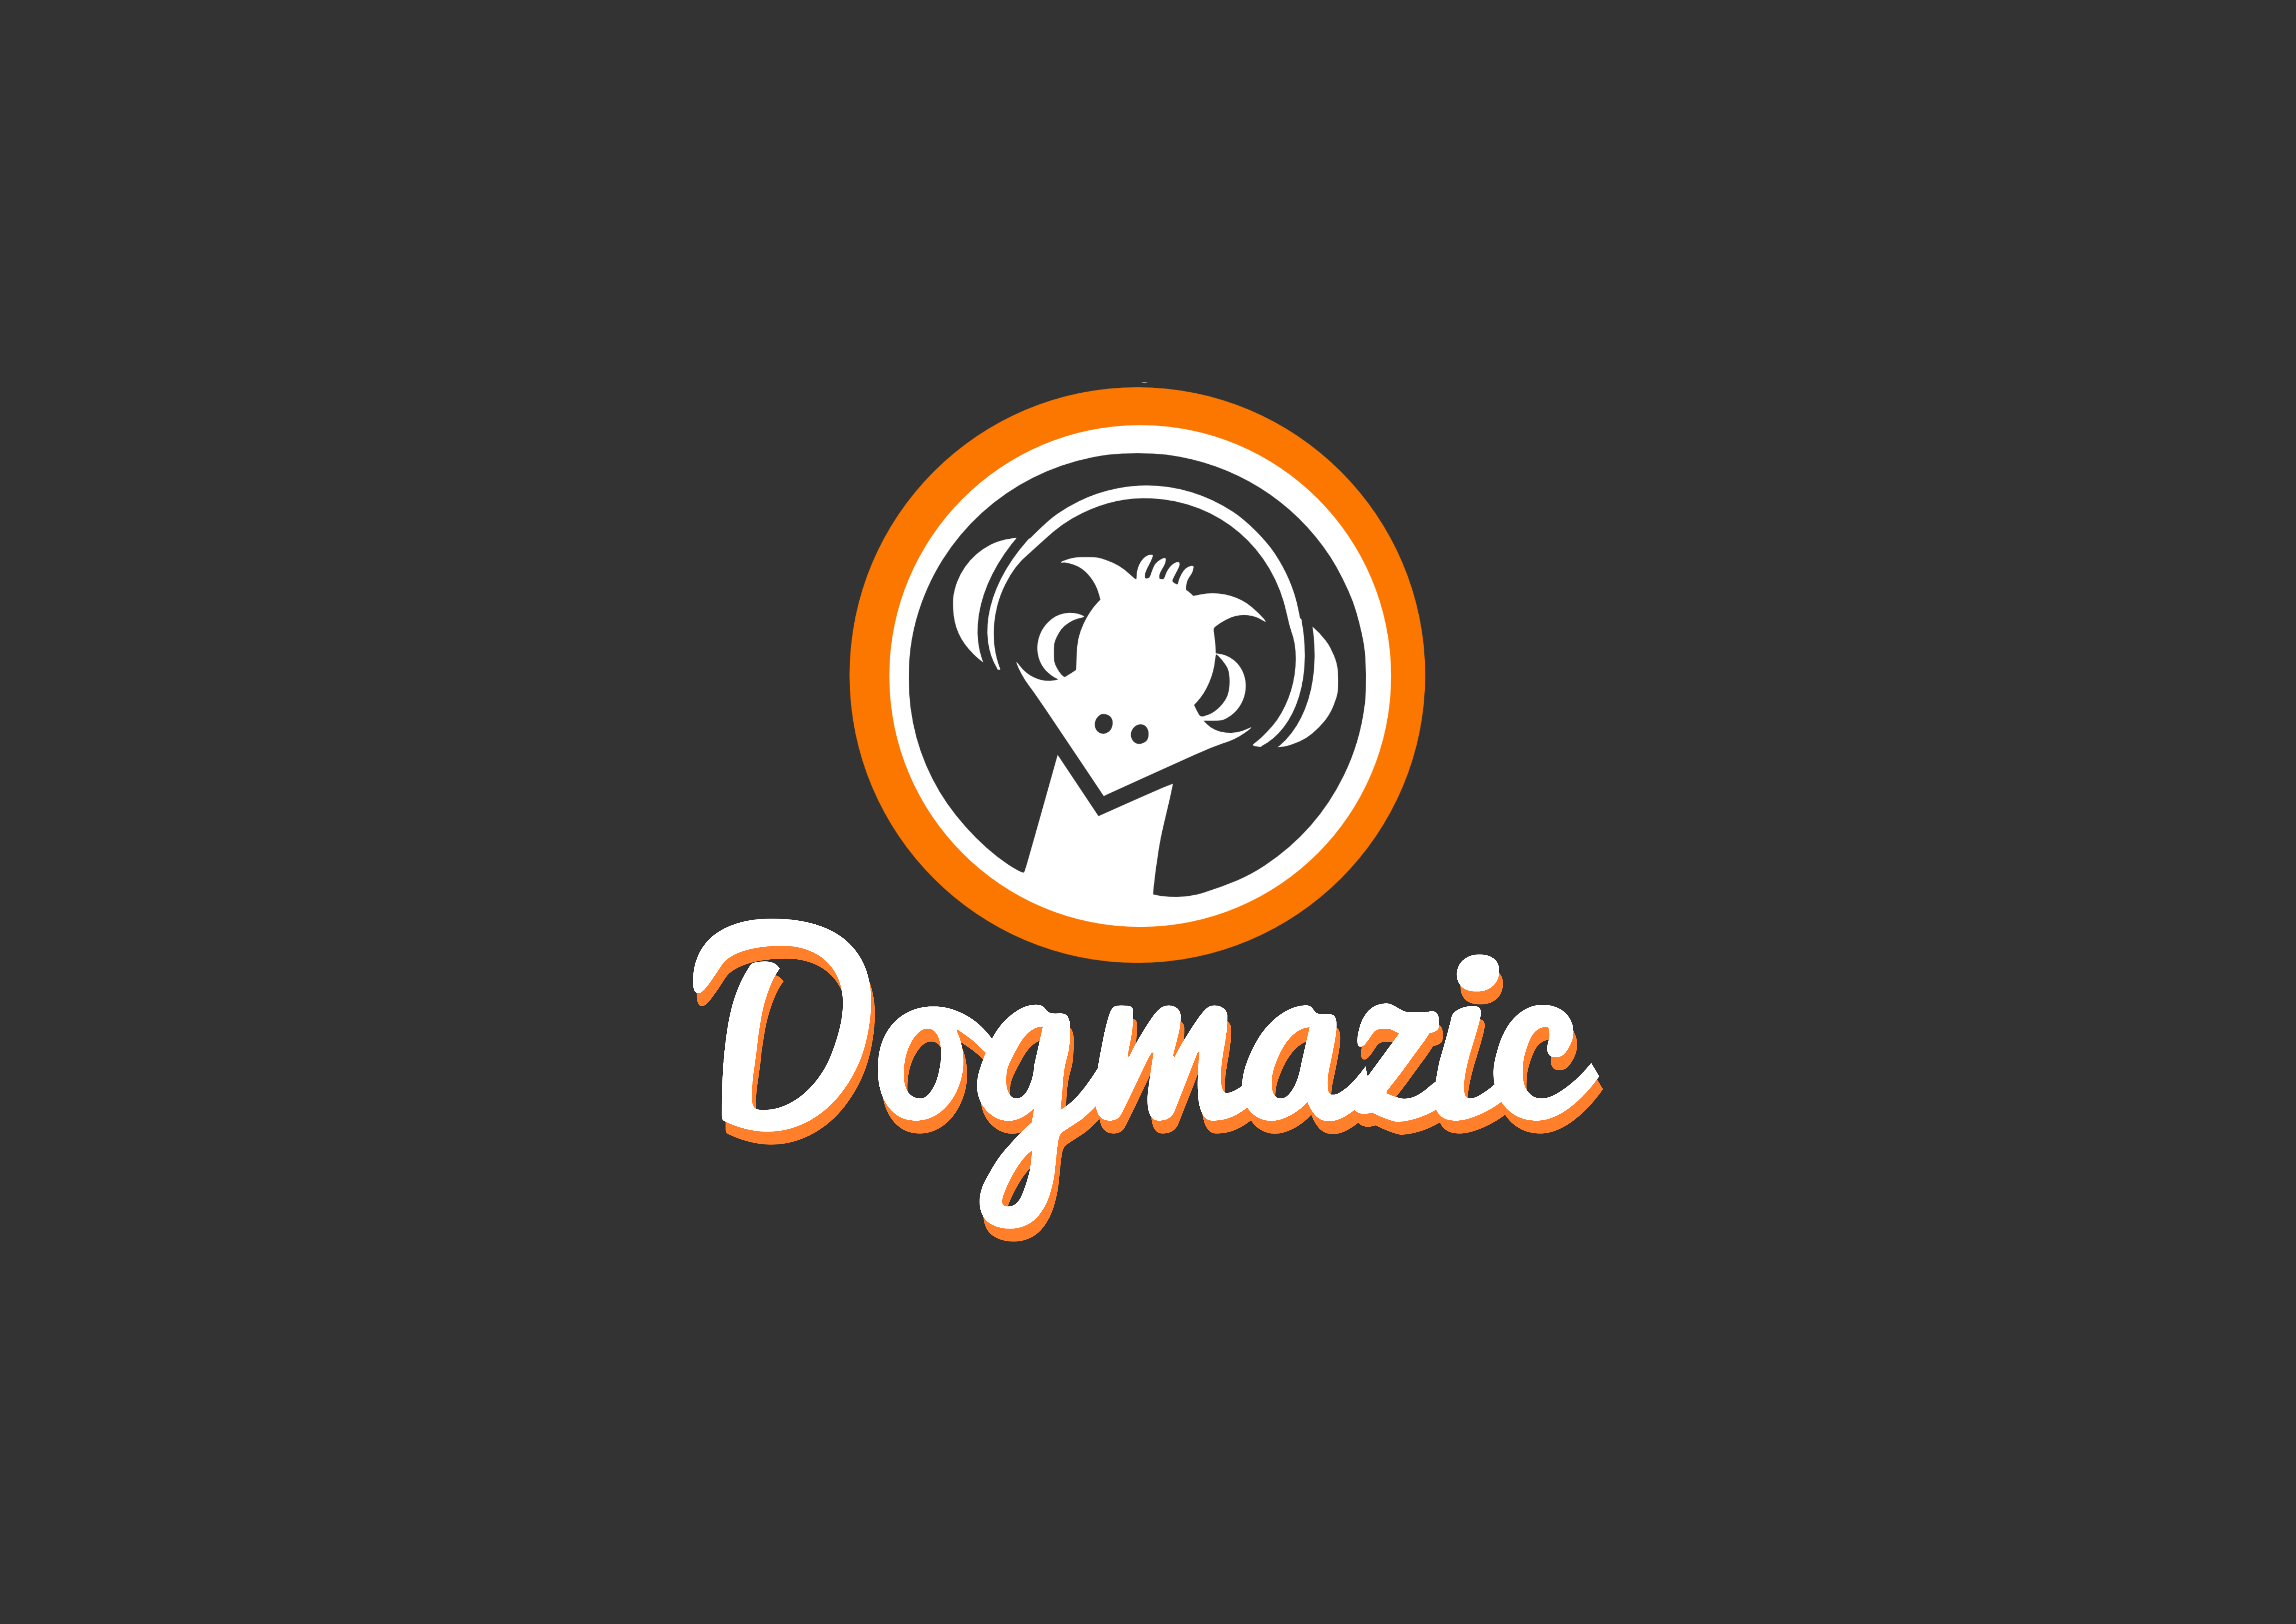 Dogmazic-wallpaper-logo